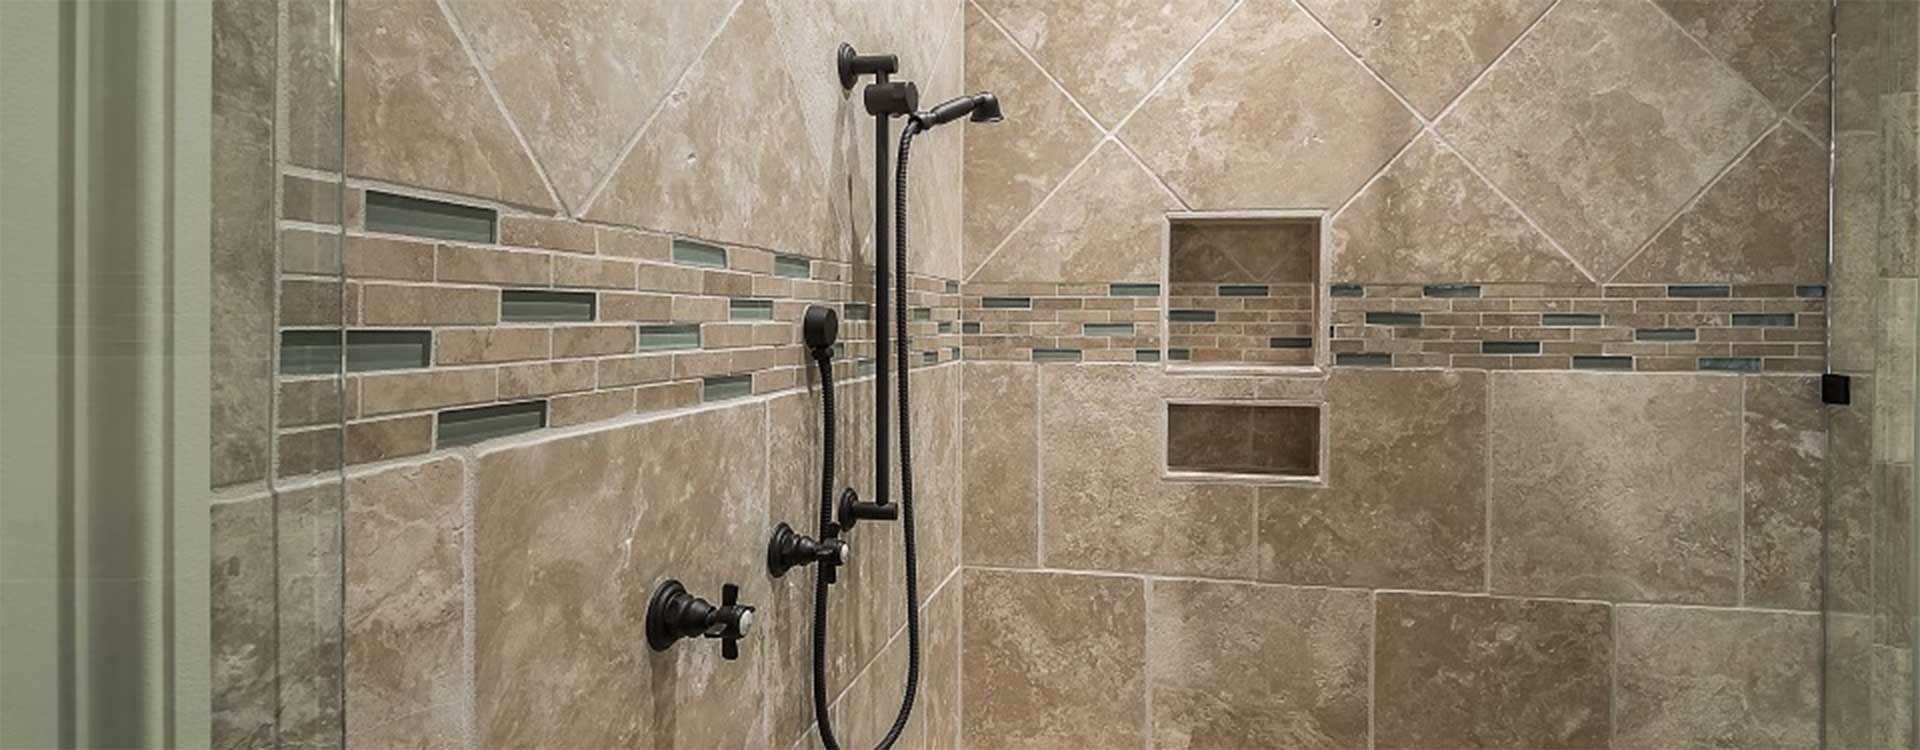 type grout sealer shower